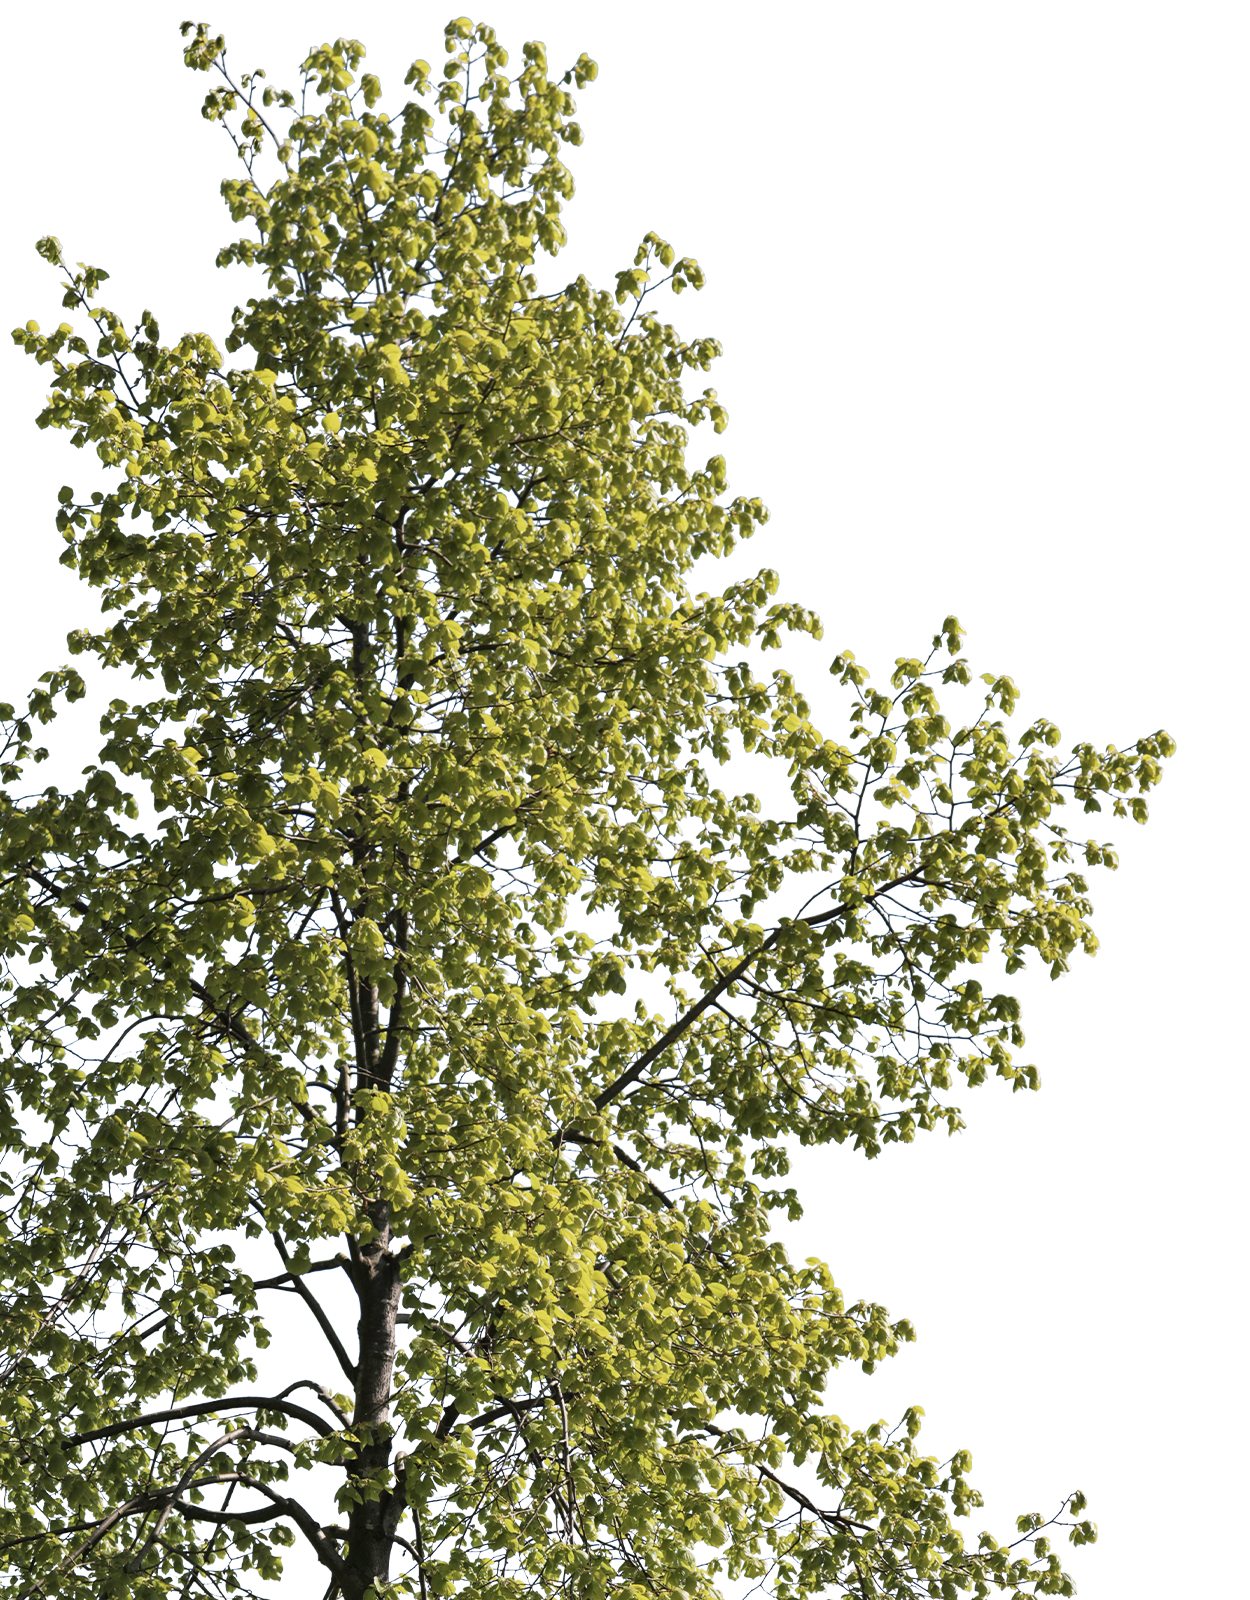 Tilia cordata m01 - cutout trees